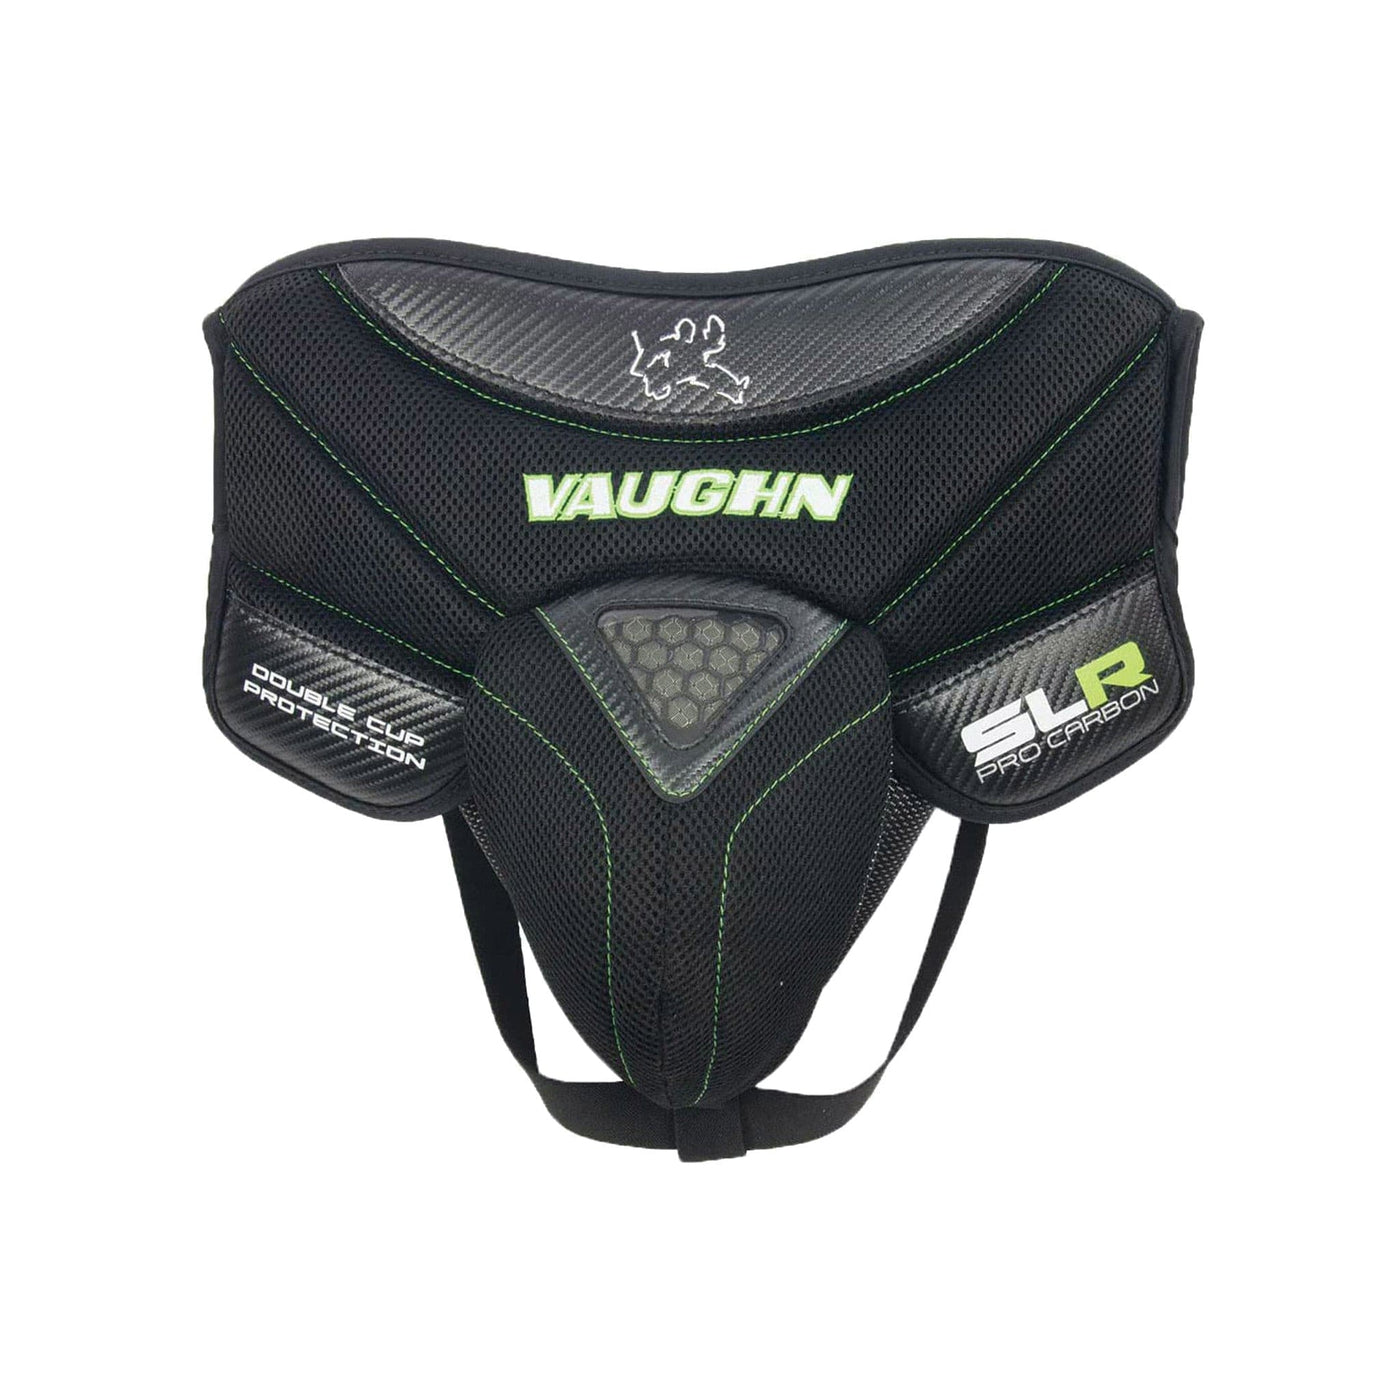 Vaughn Ventus SLR2 Pro Carbon Senior Goalie Jock